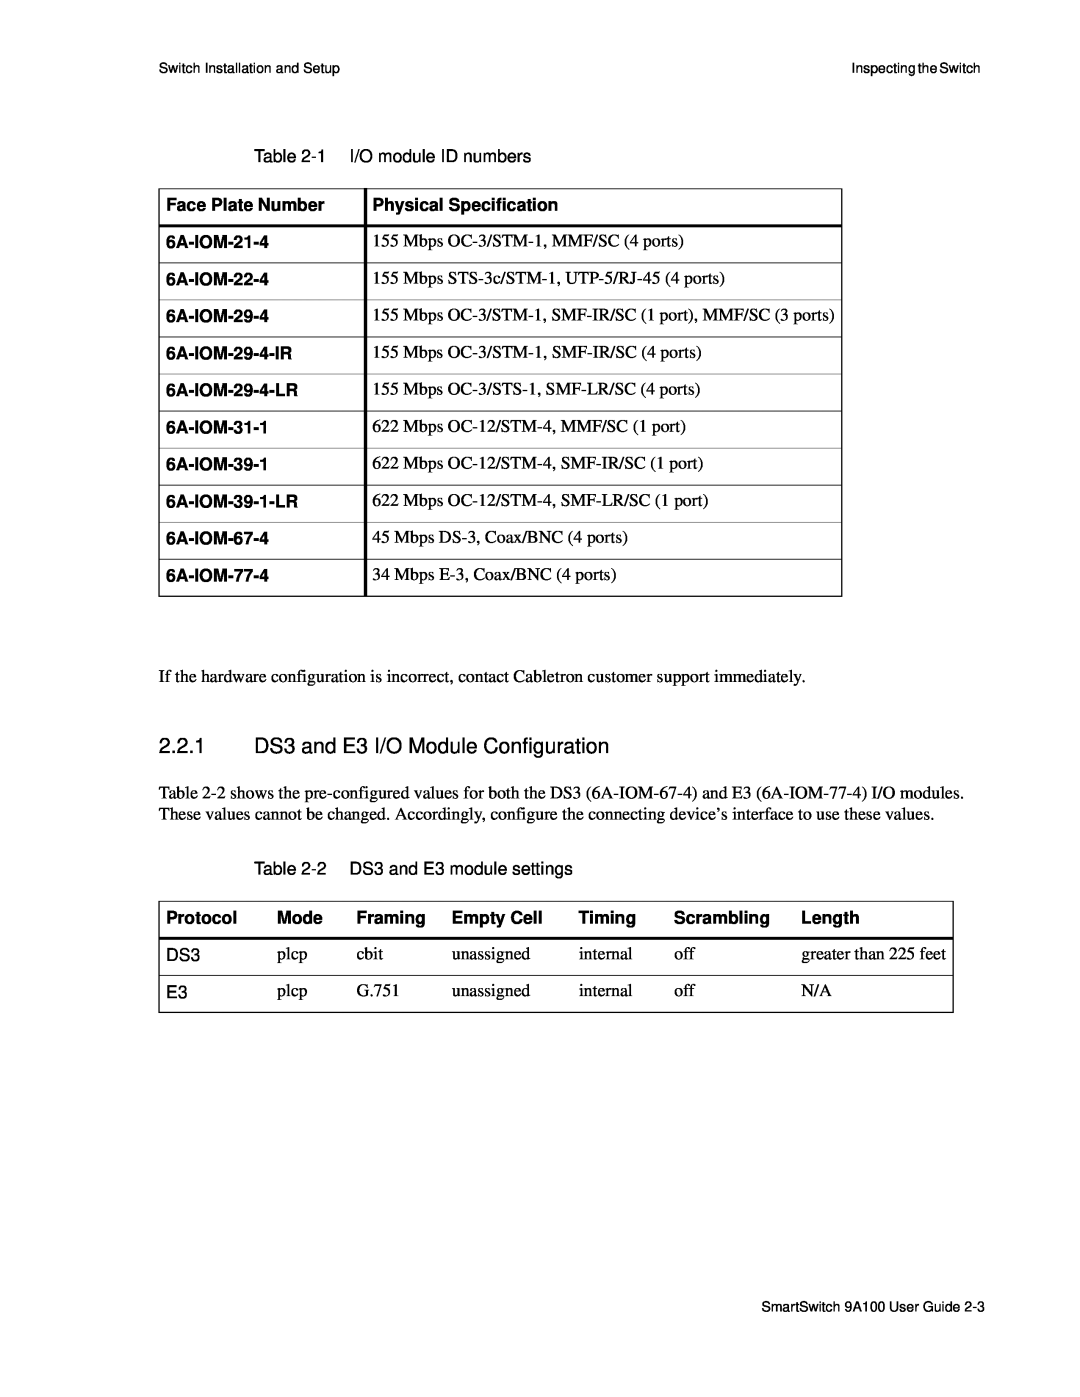 Cabletron Systems 9A100 manual 2.2.1 DS3 and E3 I/O Module Configuration 